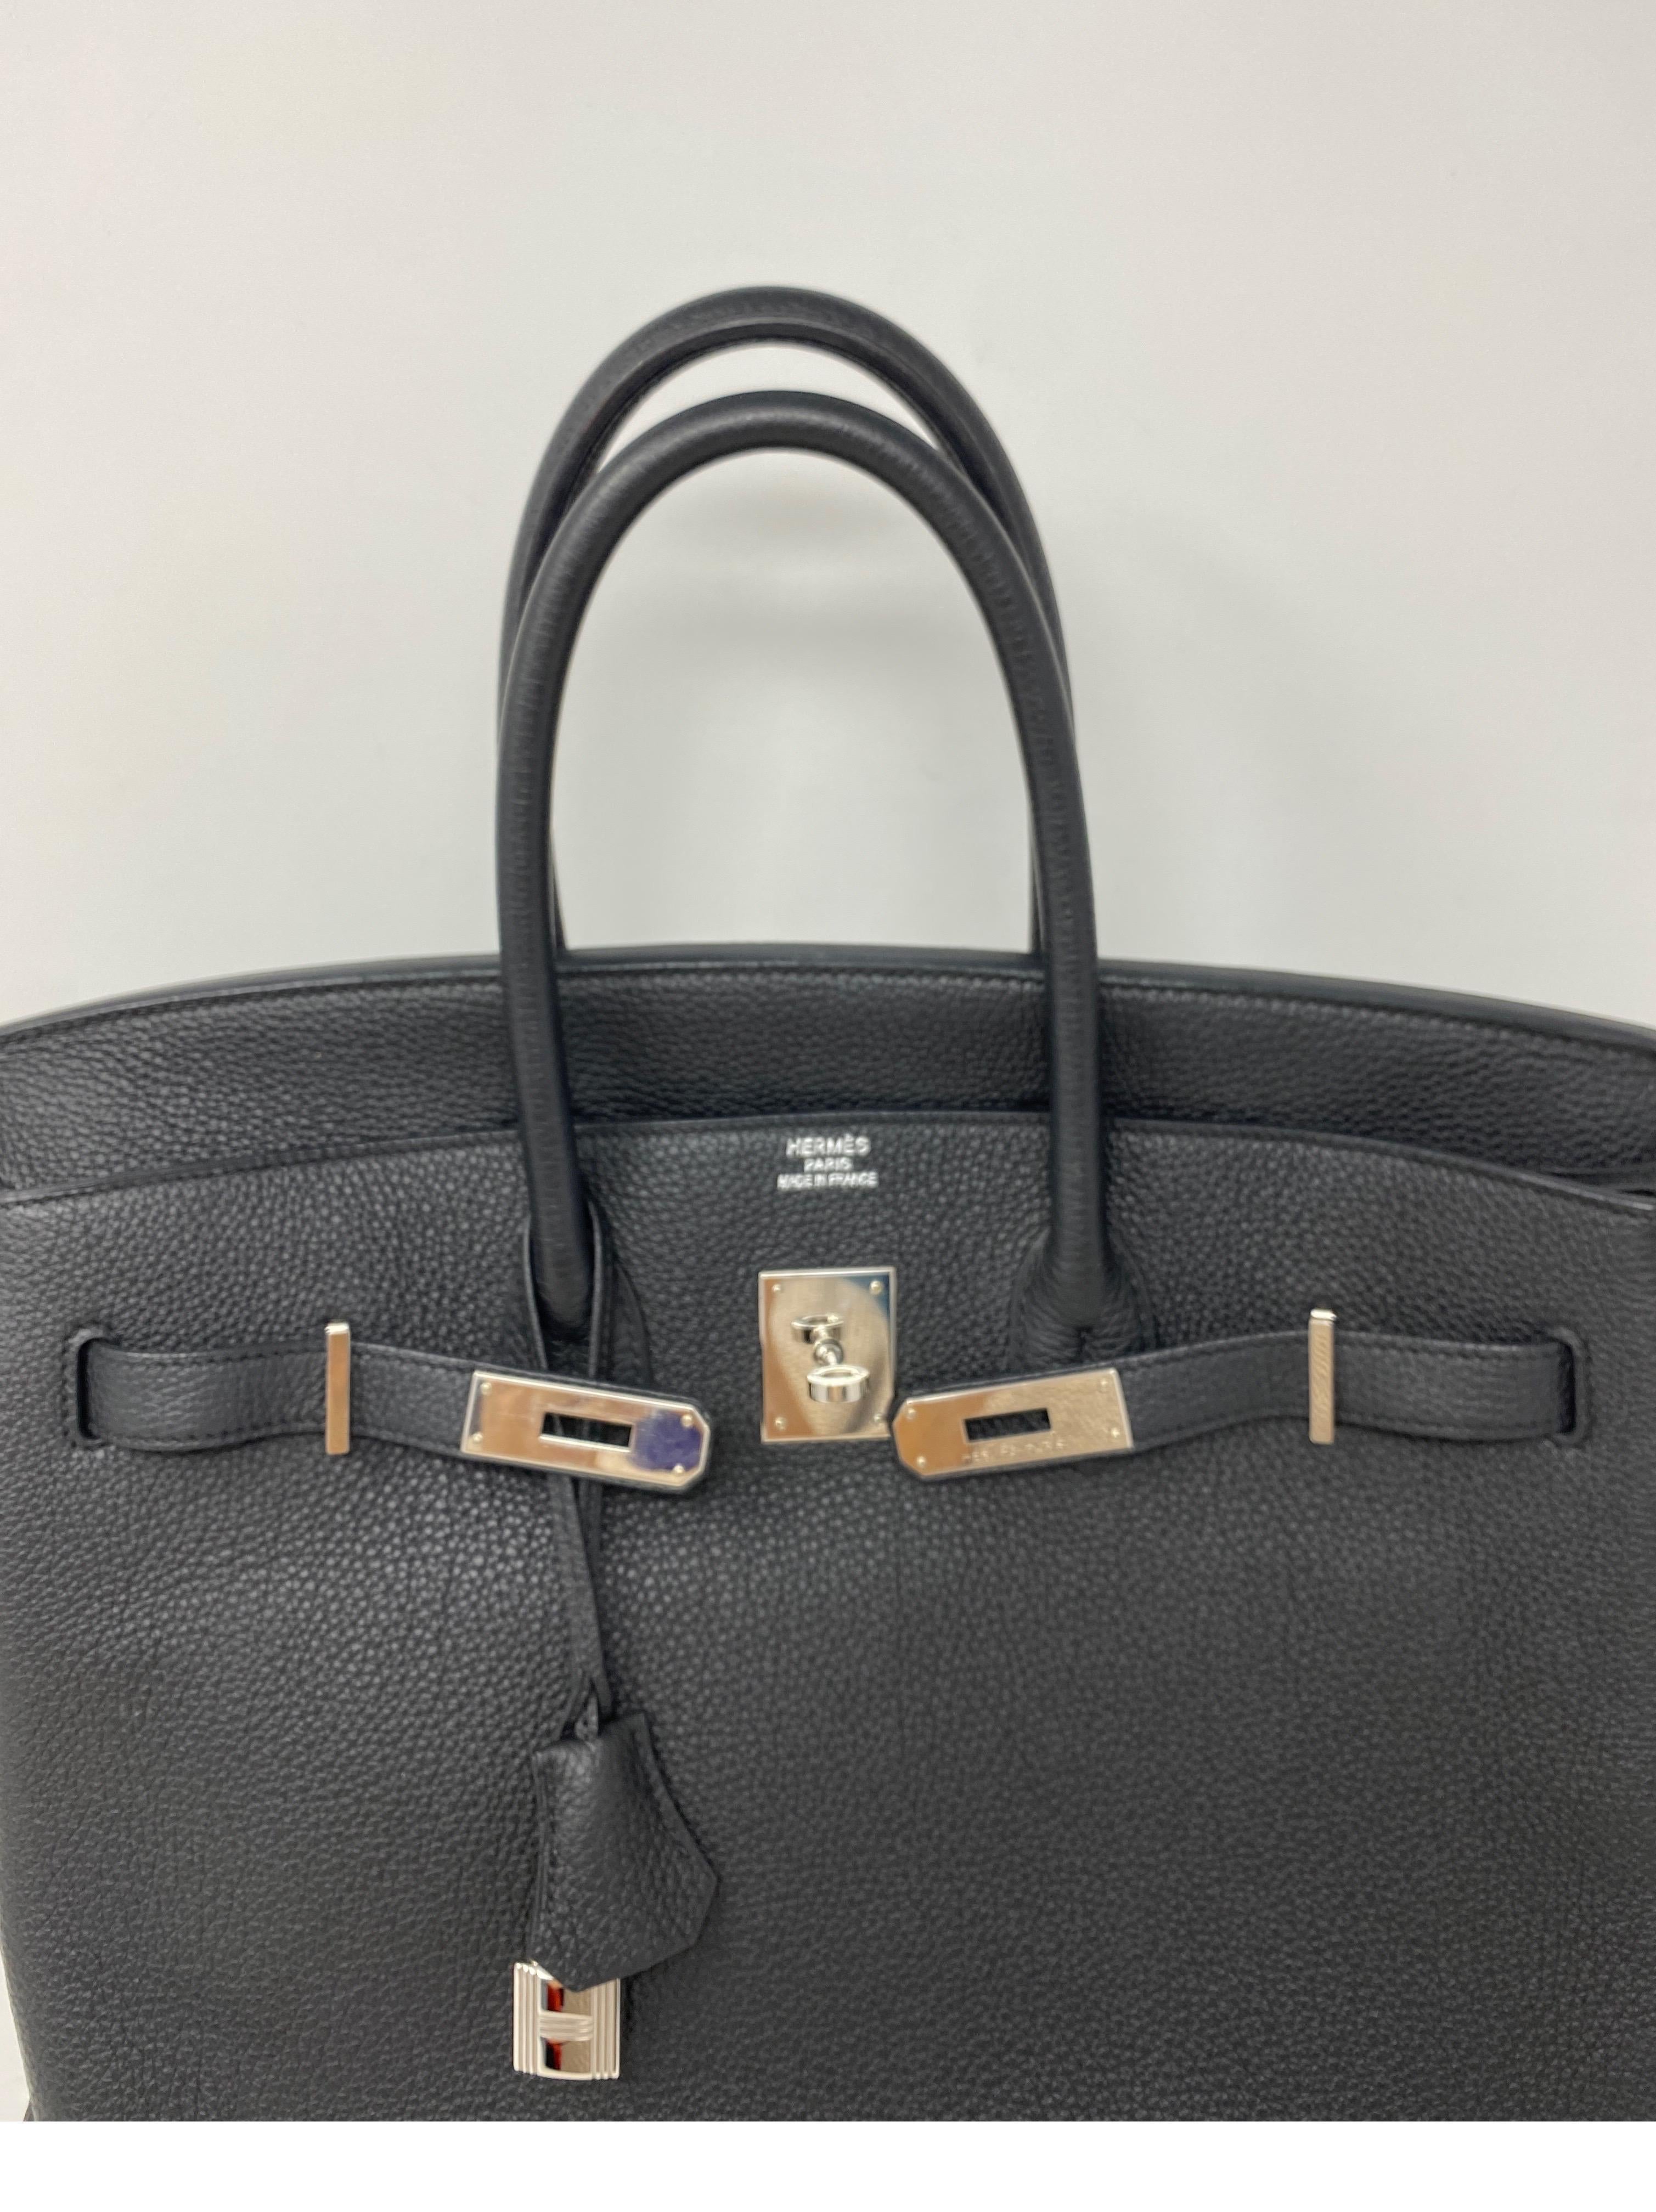 Women's or Men's Hermes Black Birkin 35 Bag